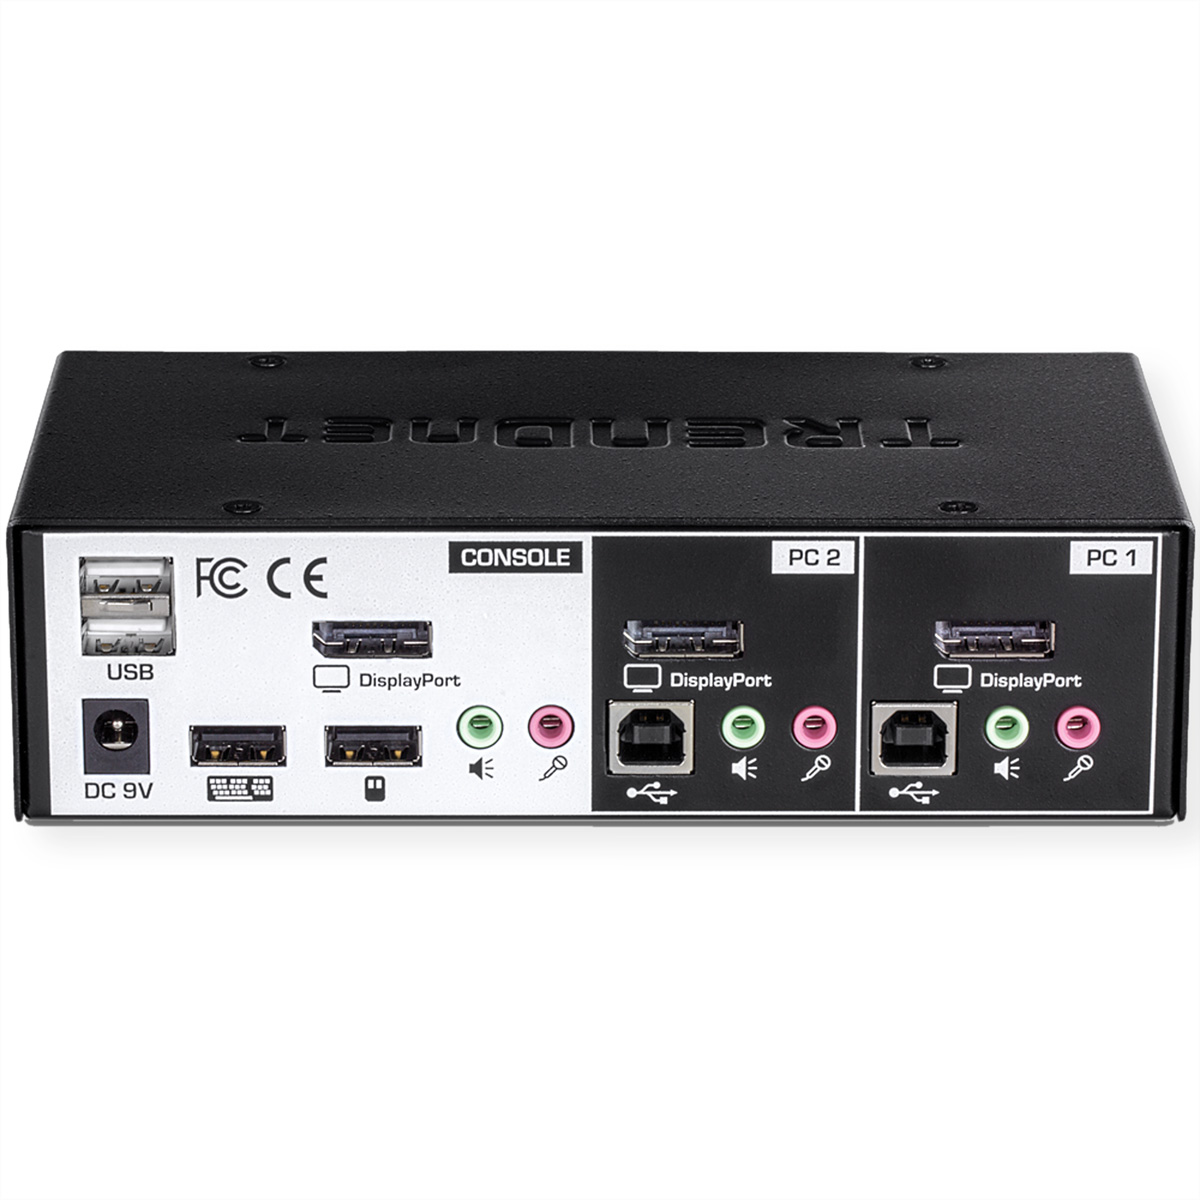 TRENDNET TK-241DP KVM Switch 2-Port DisplayPort (KVM)-Switches Tastatur/Video/Maus